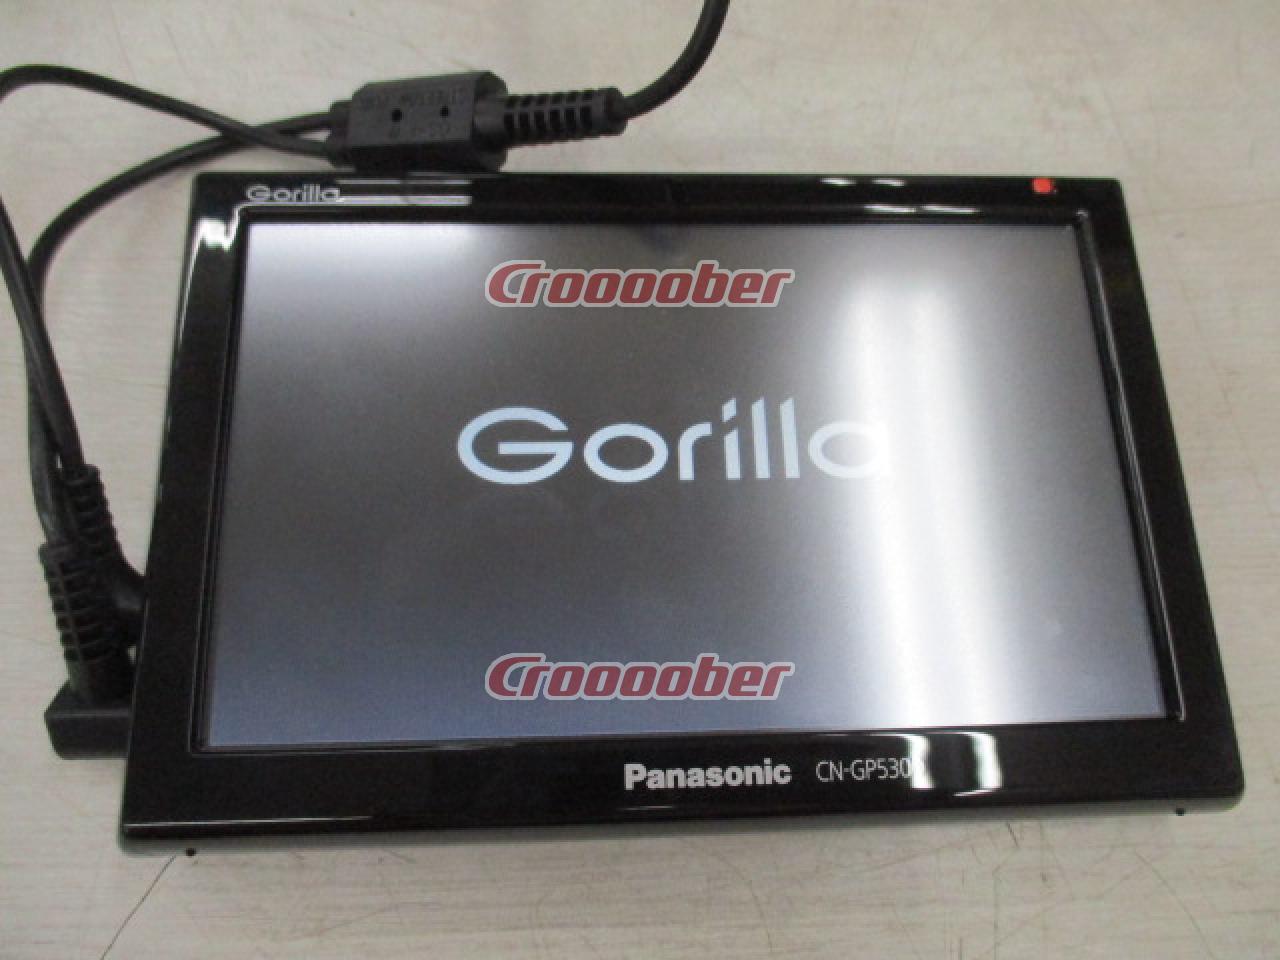 Panasonic Gorilla CN-GP530D | Portable Memory Navigation(digital 